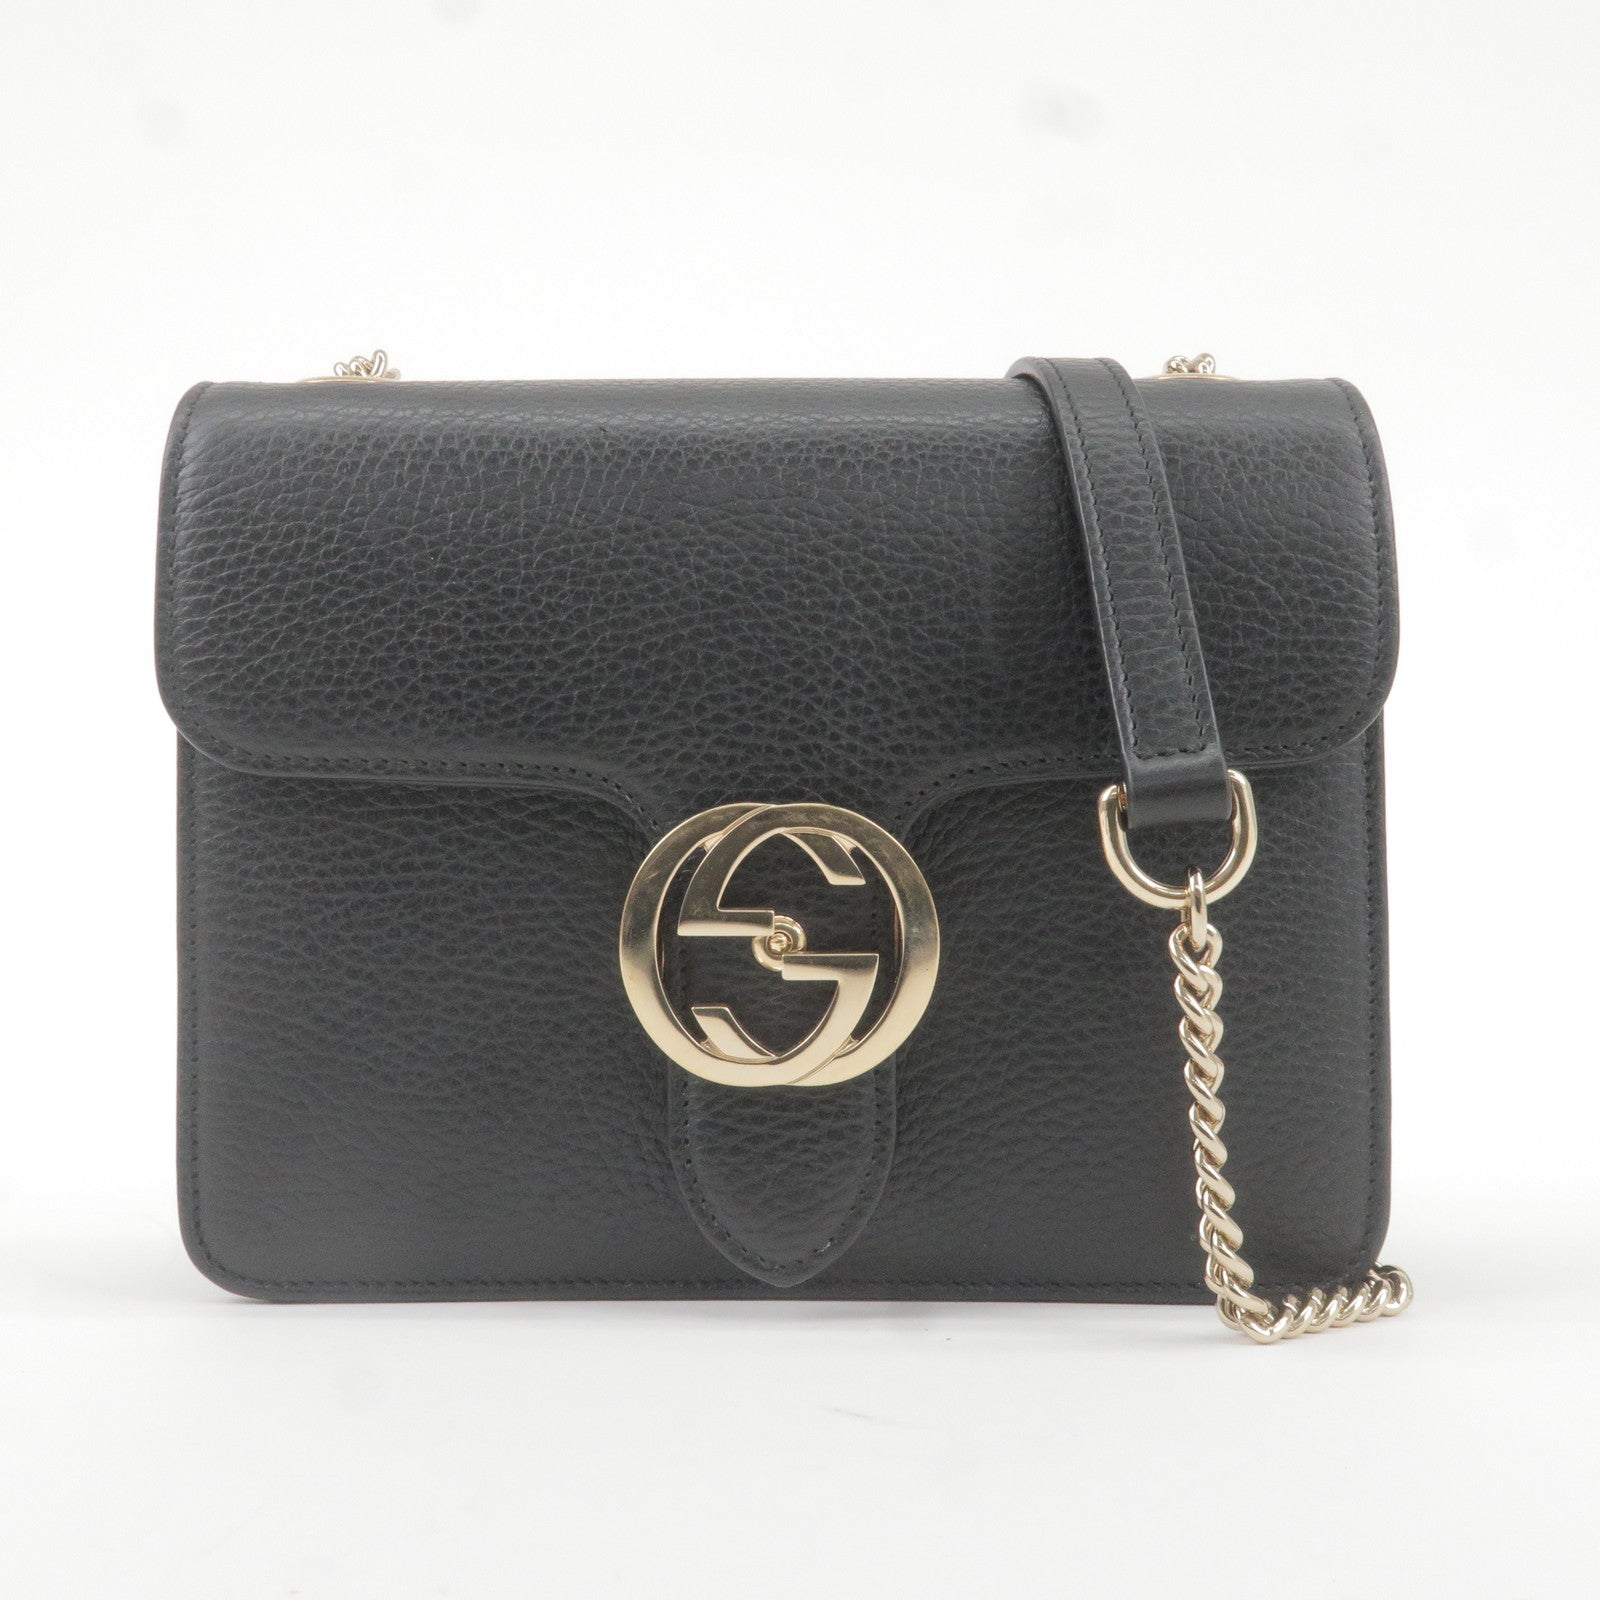 Gucci Black Leather Interlocking G Chain Shoulder Bag Gucci